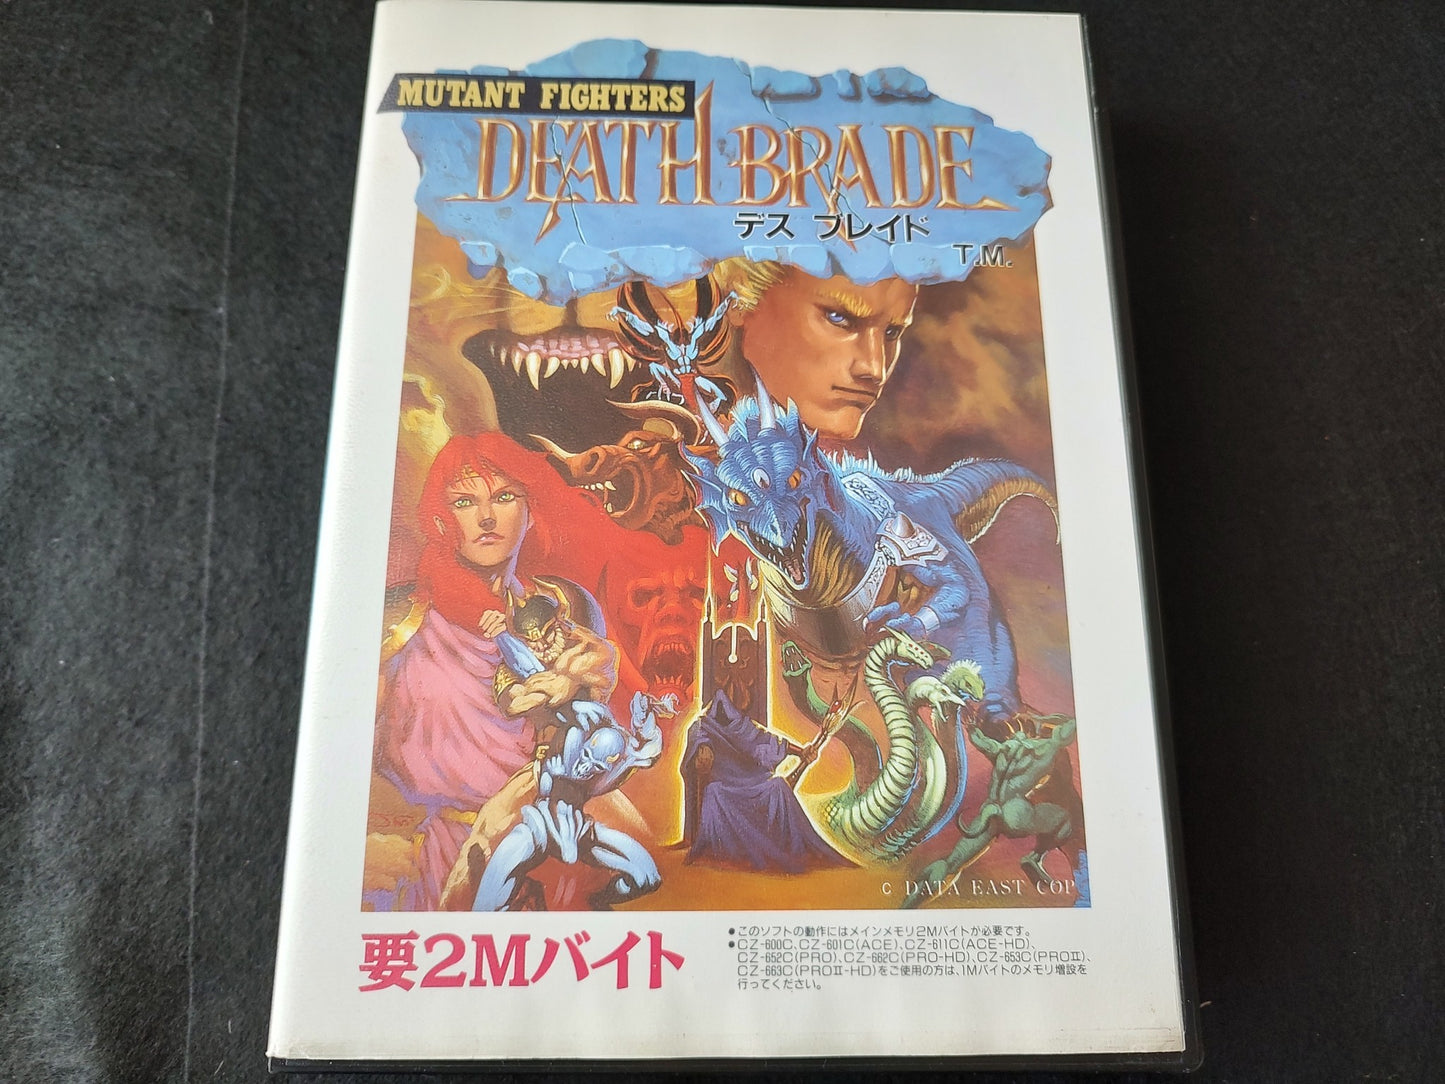 DEATH BRADE SHARP X68000 Game set/Gamedisk, Manual, Box set, Working-f0221-